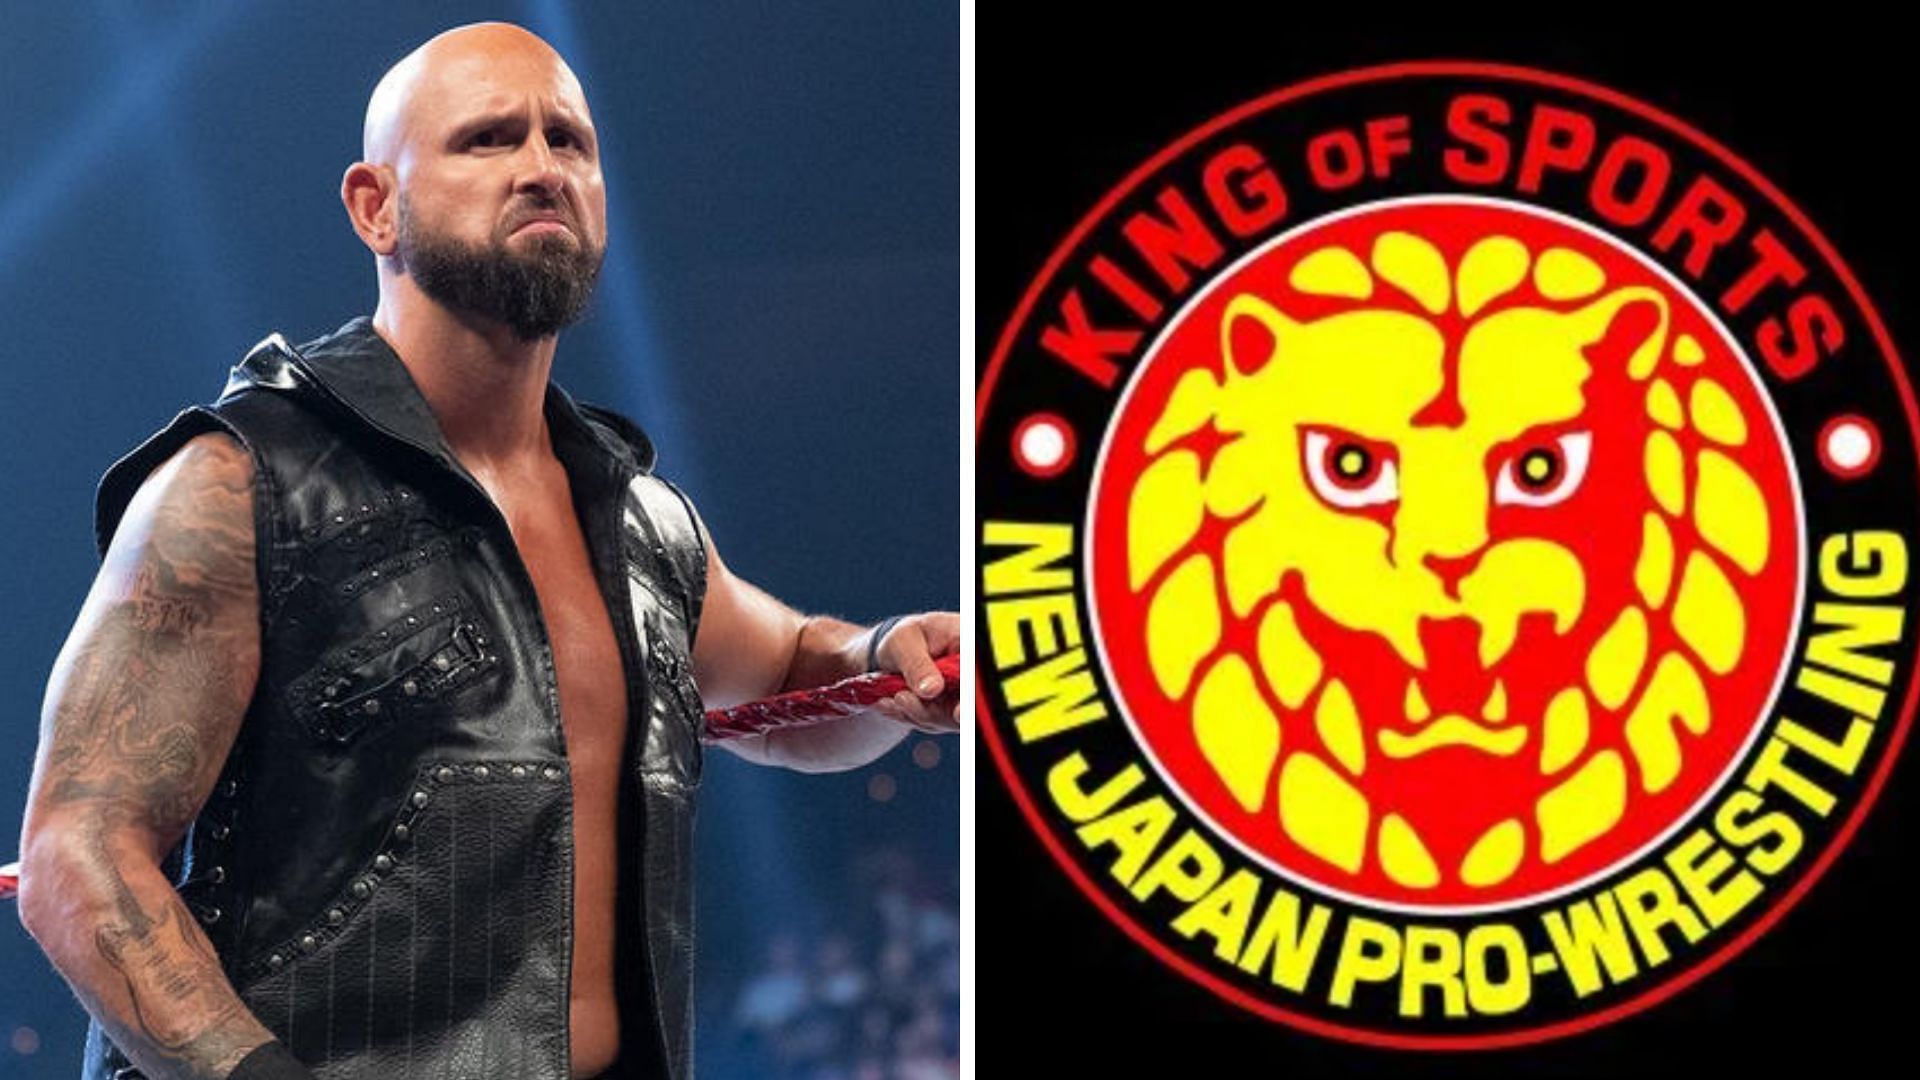 WWE Superstar Karl Anderson has been warned by NJPW